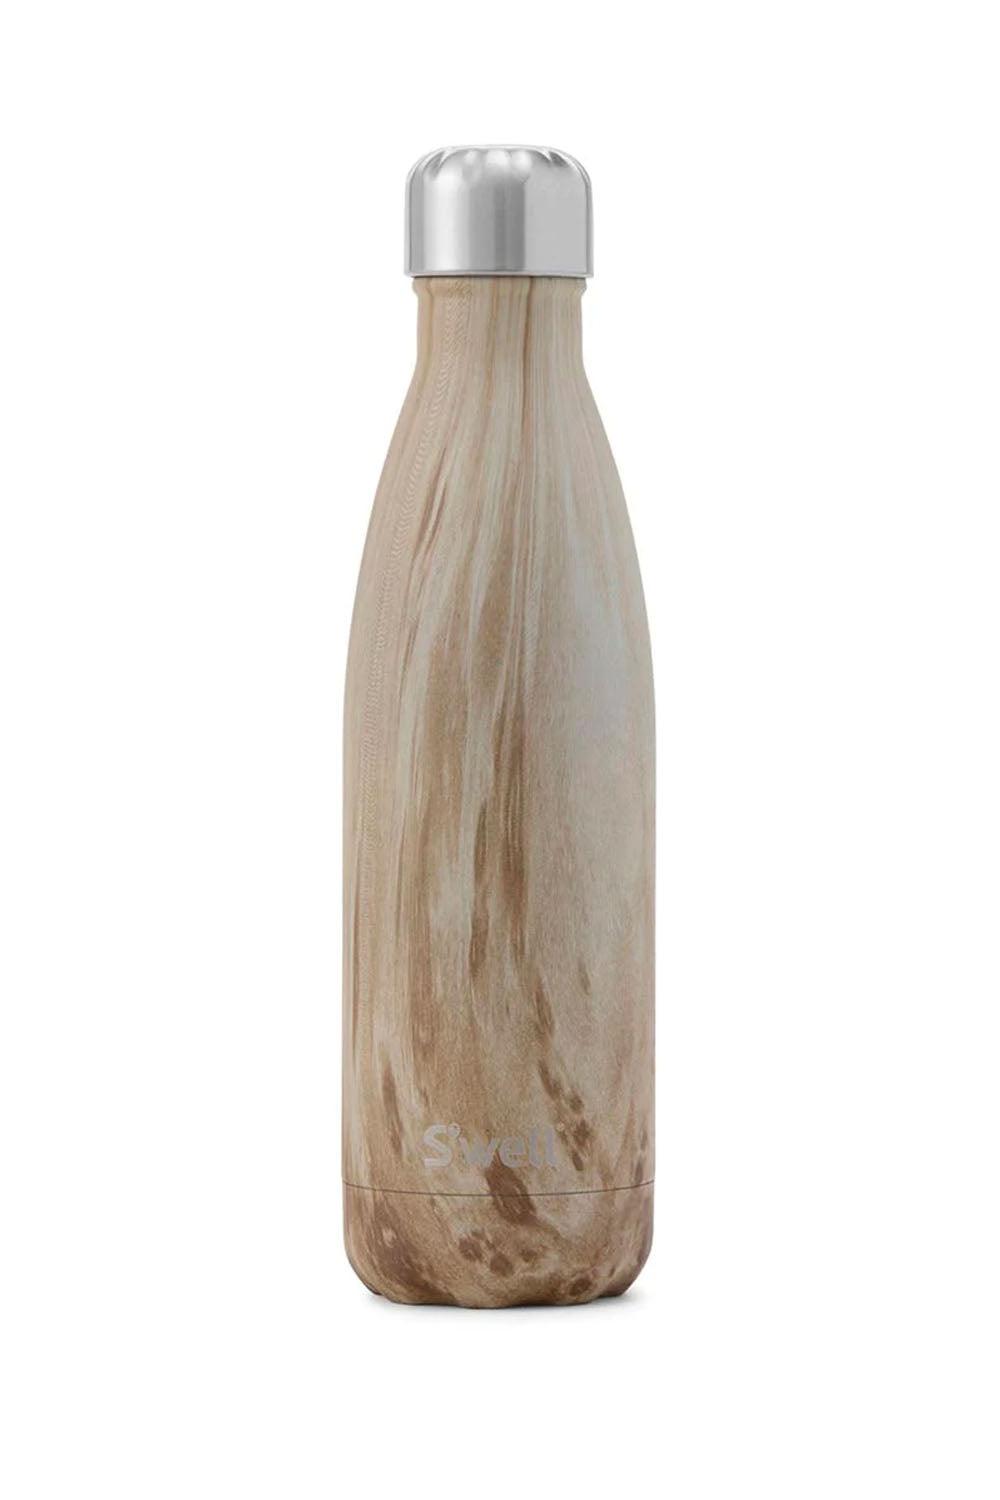 Blond wood 9 oz - 250 ml